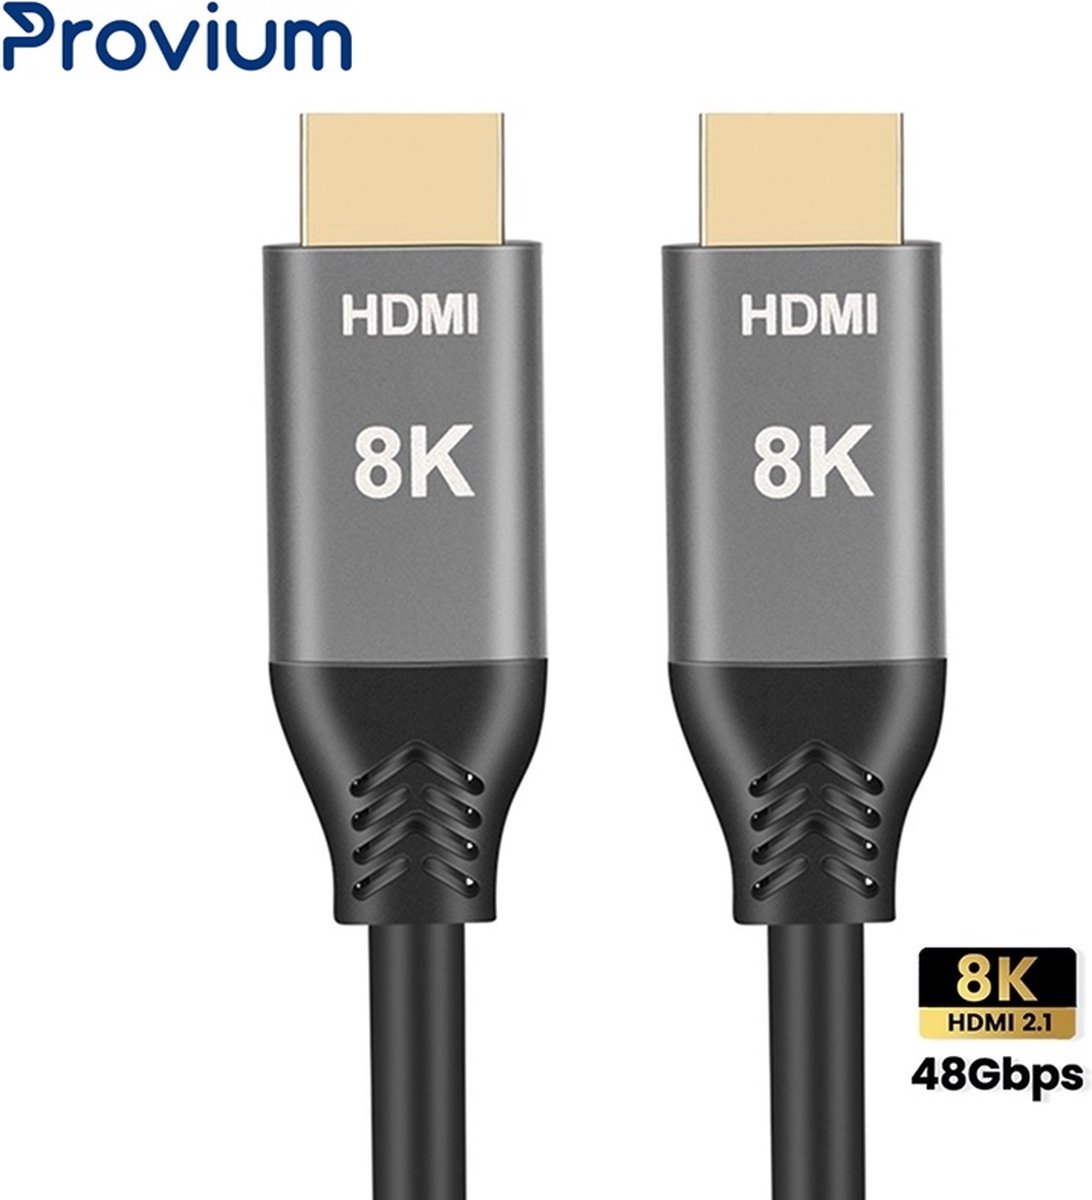 Provium - HDMI 2.1 kabel - Ultra HD 8K - HDMI naar HDMI kabel - voor o.a. PS5 en Xbox Series - 5 meter - zwart